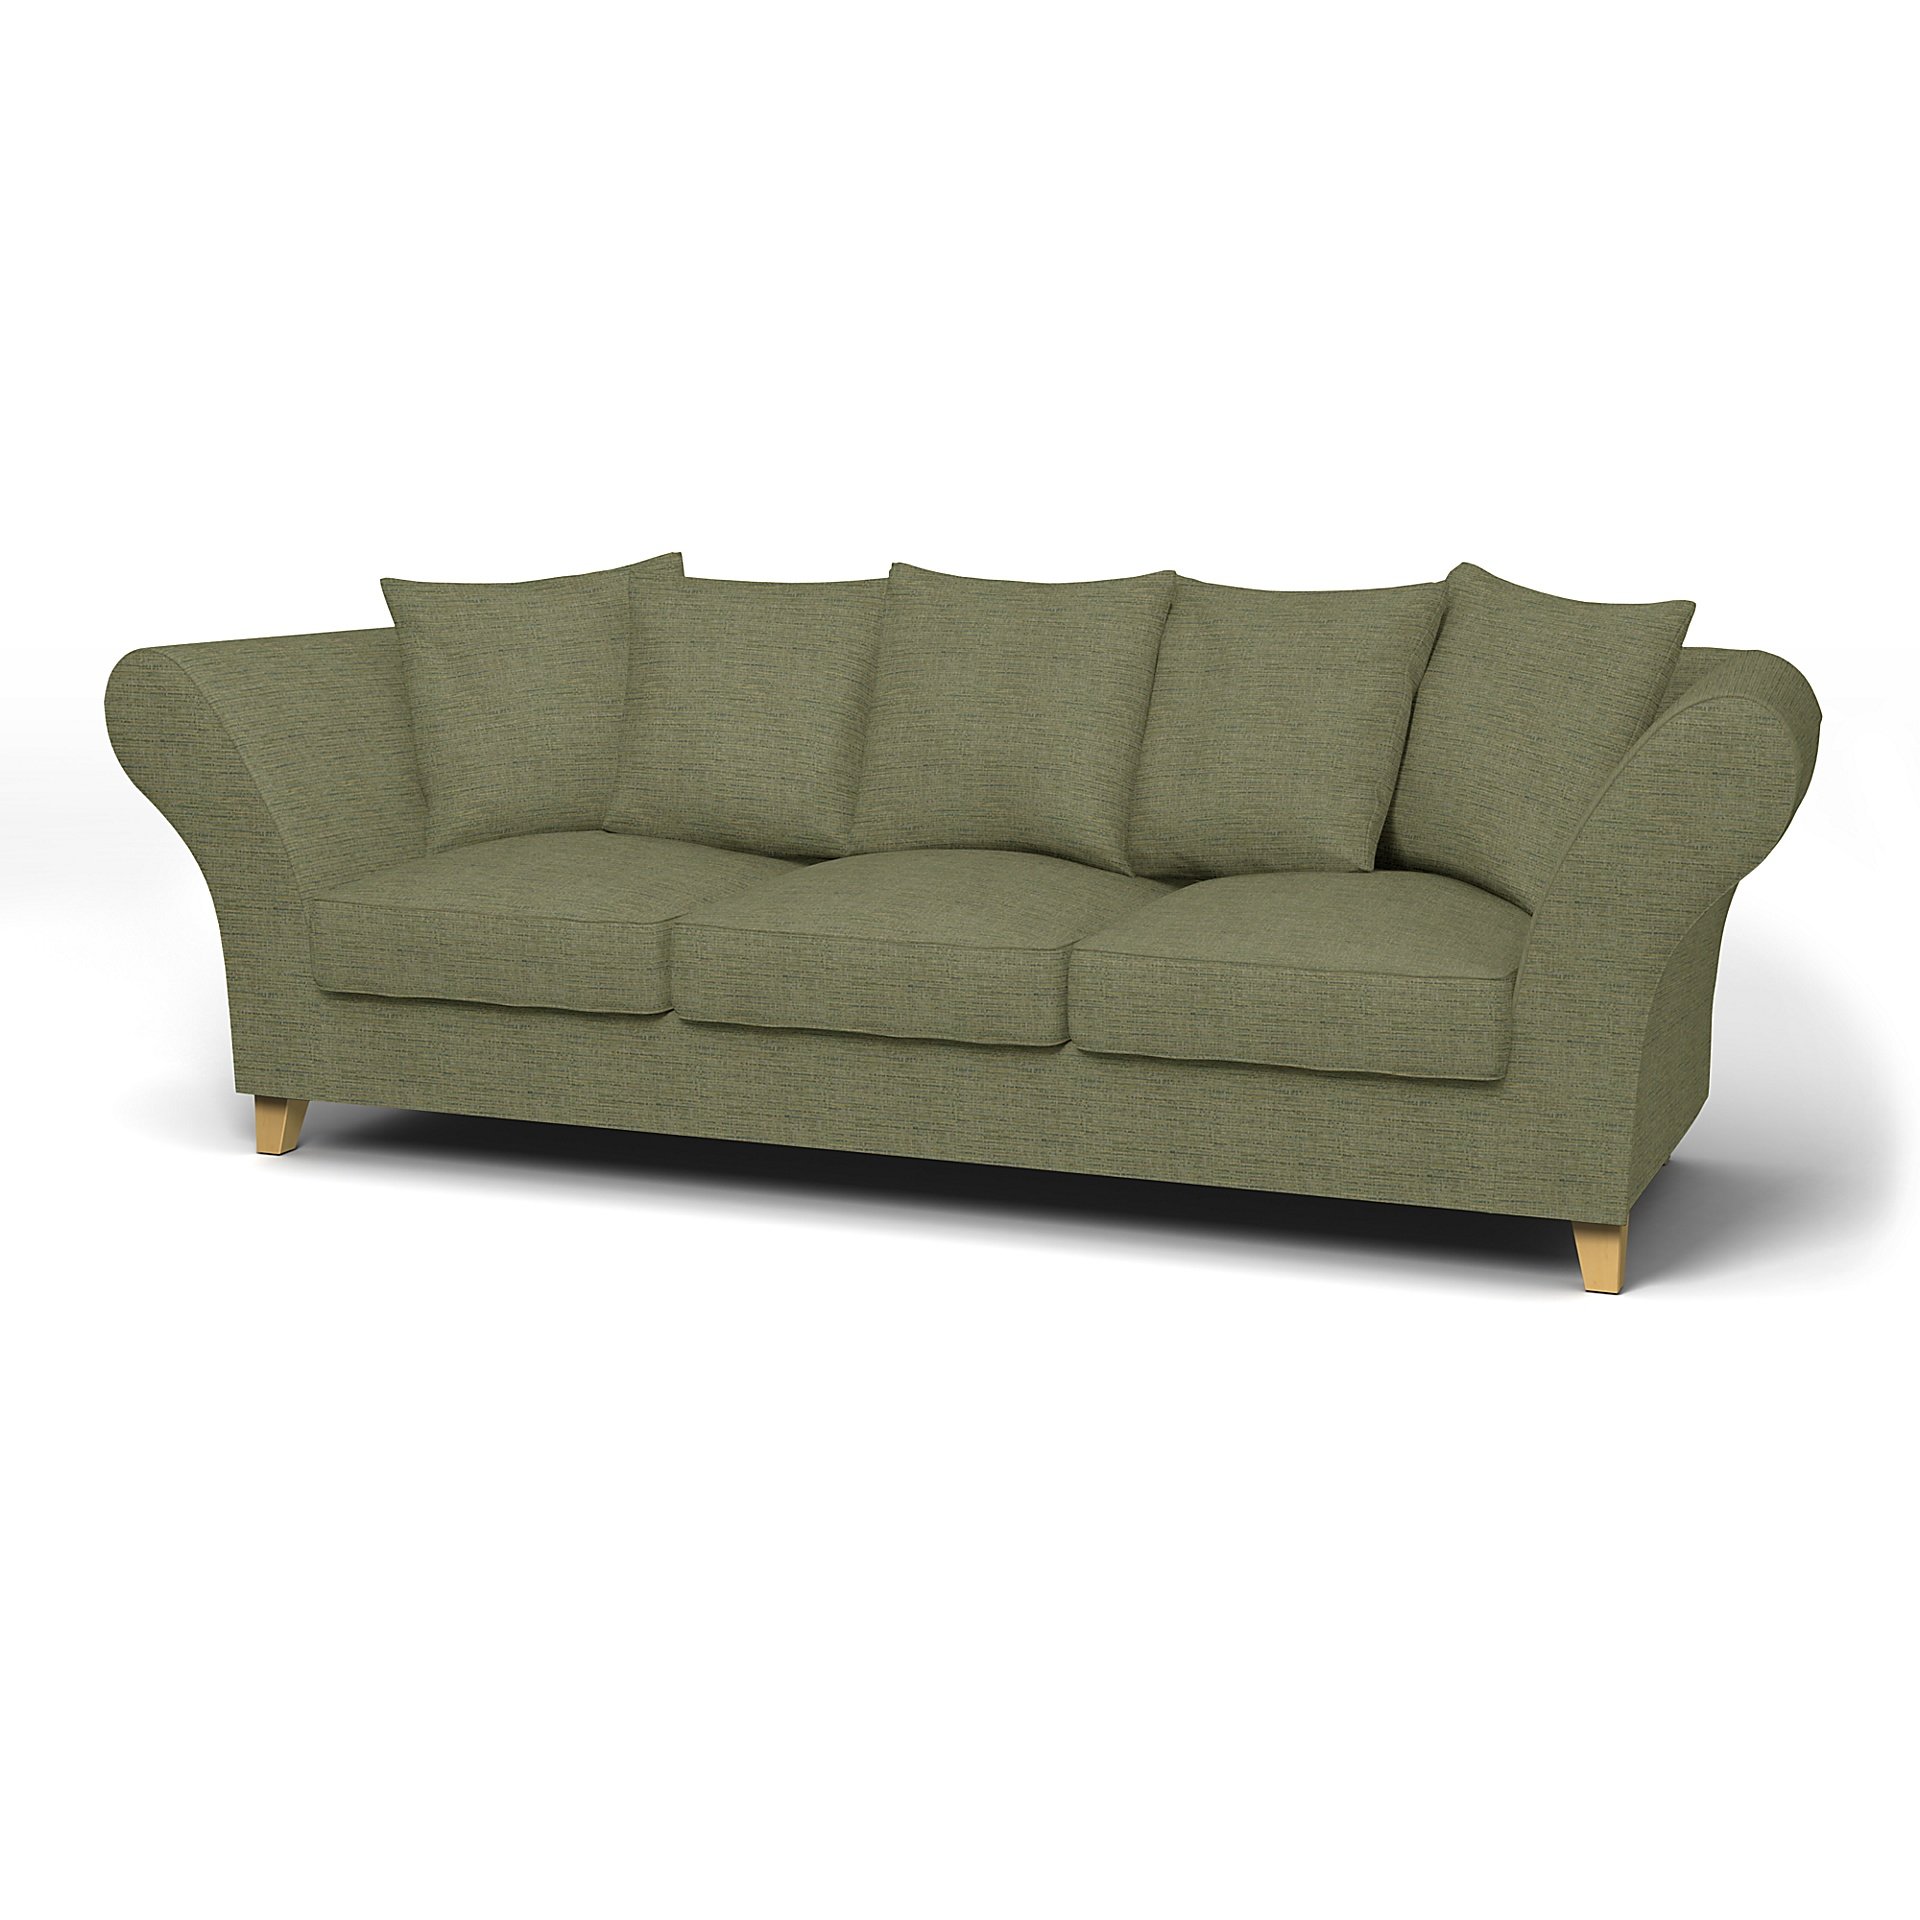 IKEA - Backa 3.5 Seater Sofa Cover, Meadow Green, Boucle & Texture - Bemz